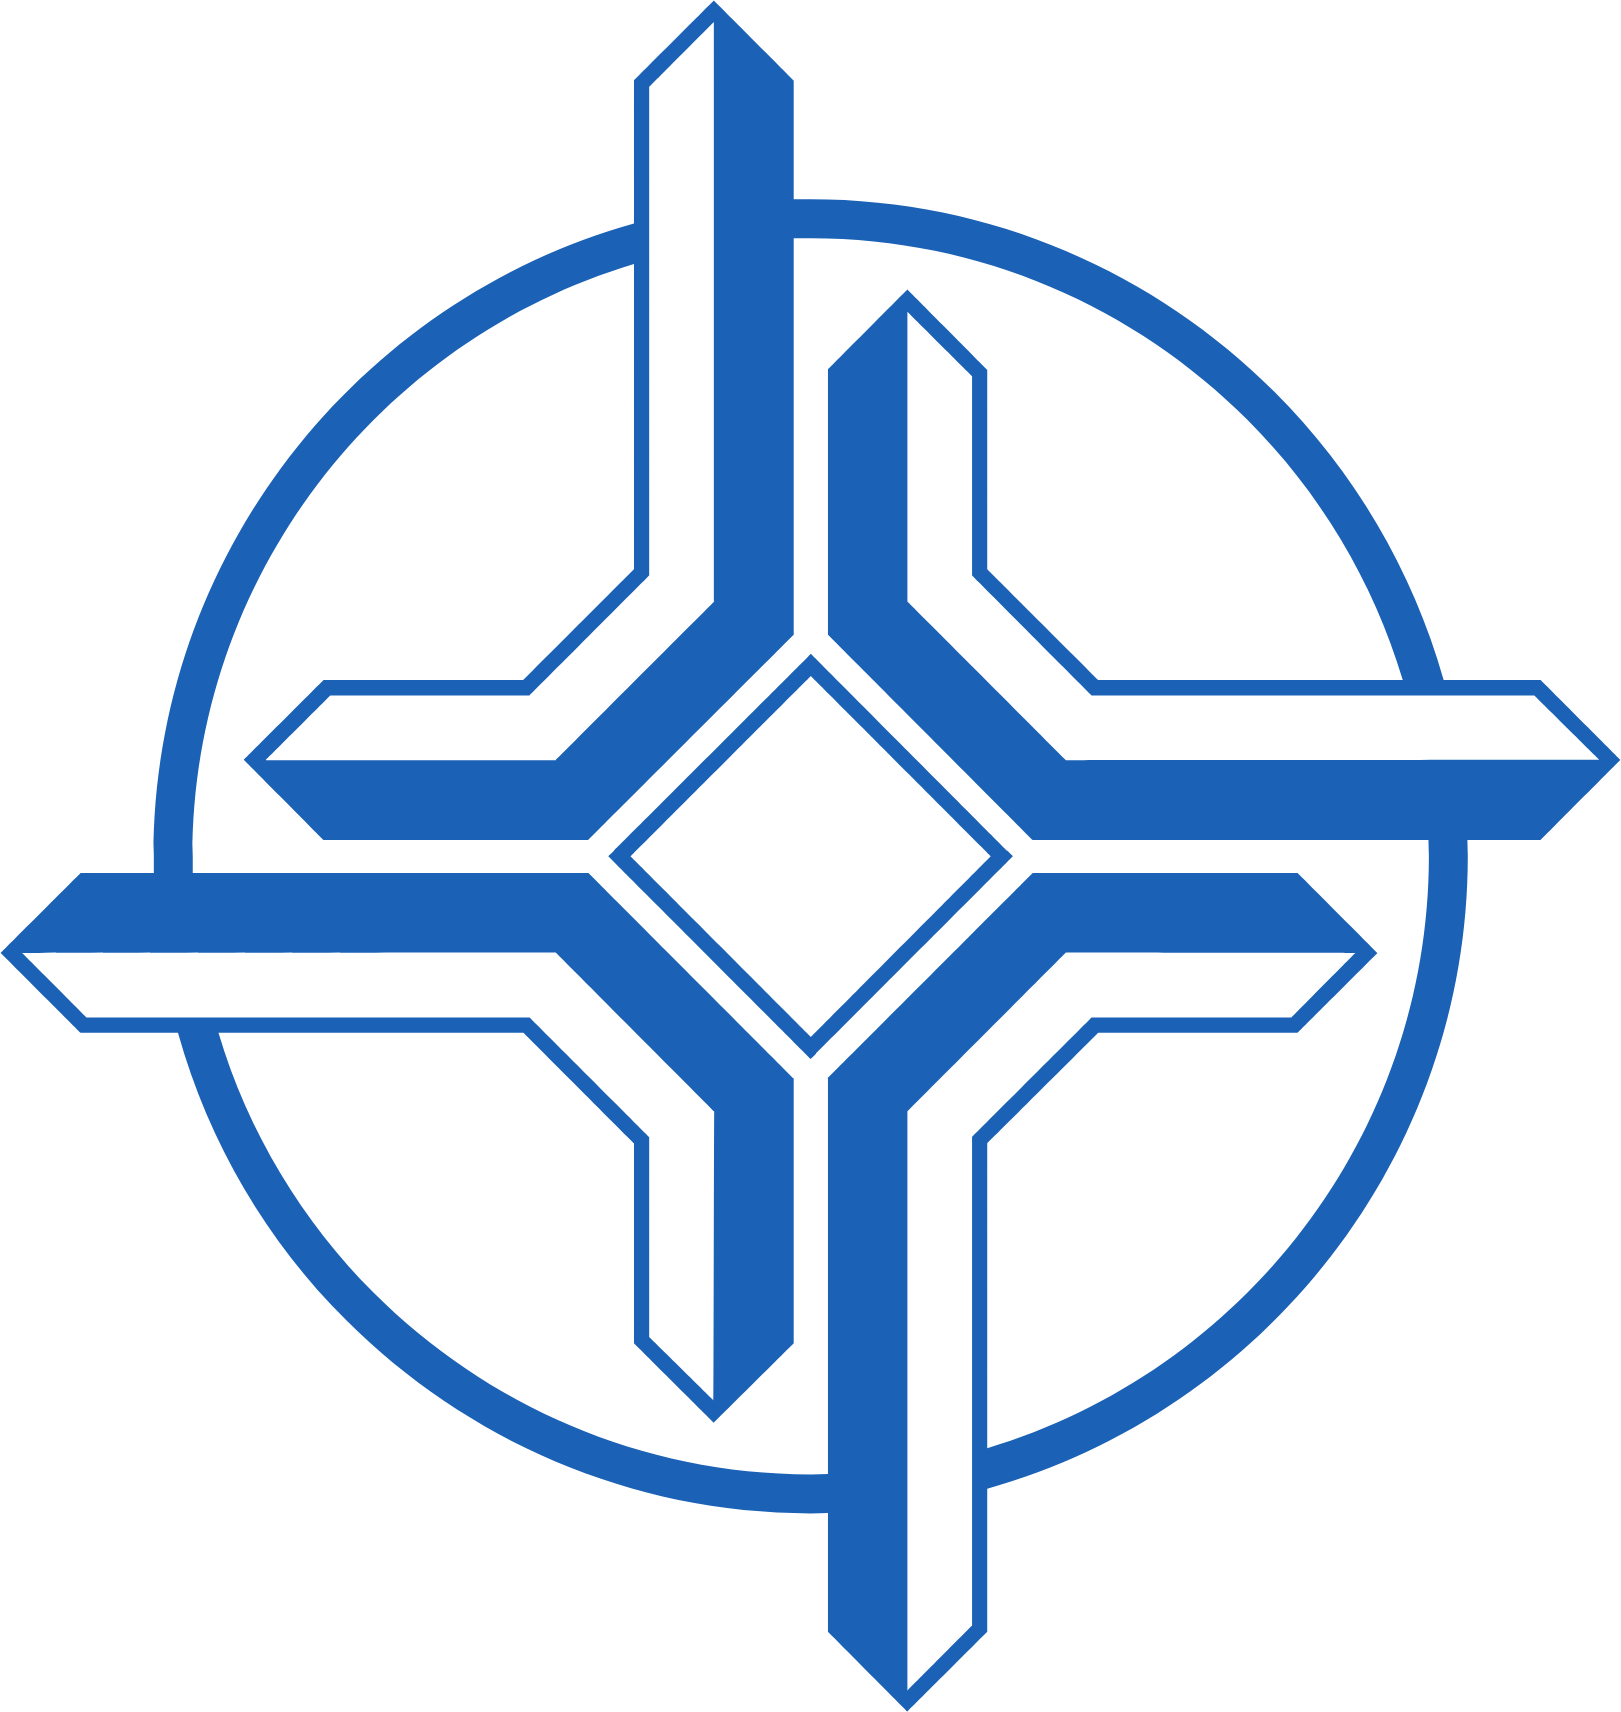 China Communications Construction logo (PNG transparent)